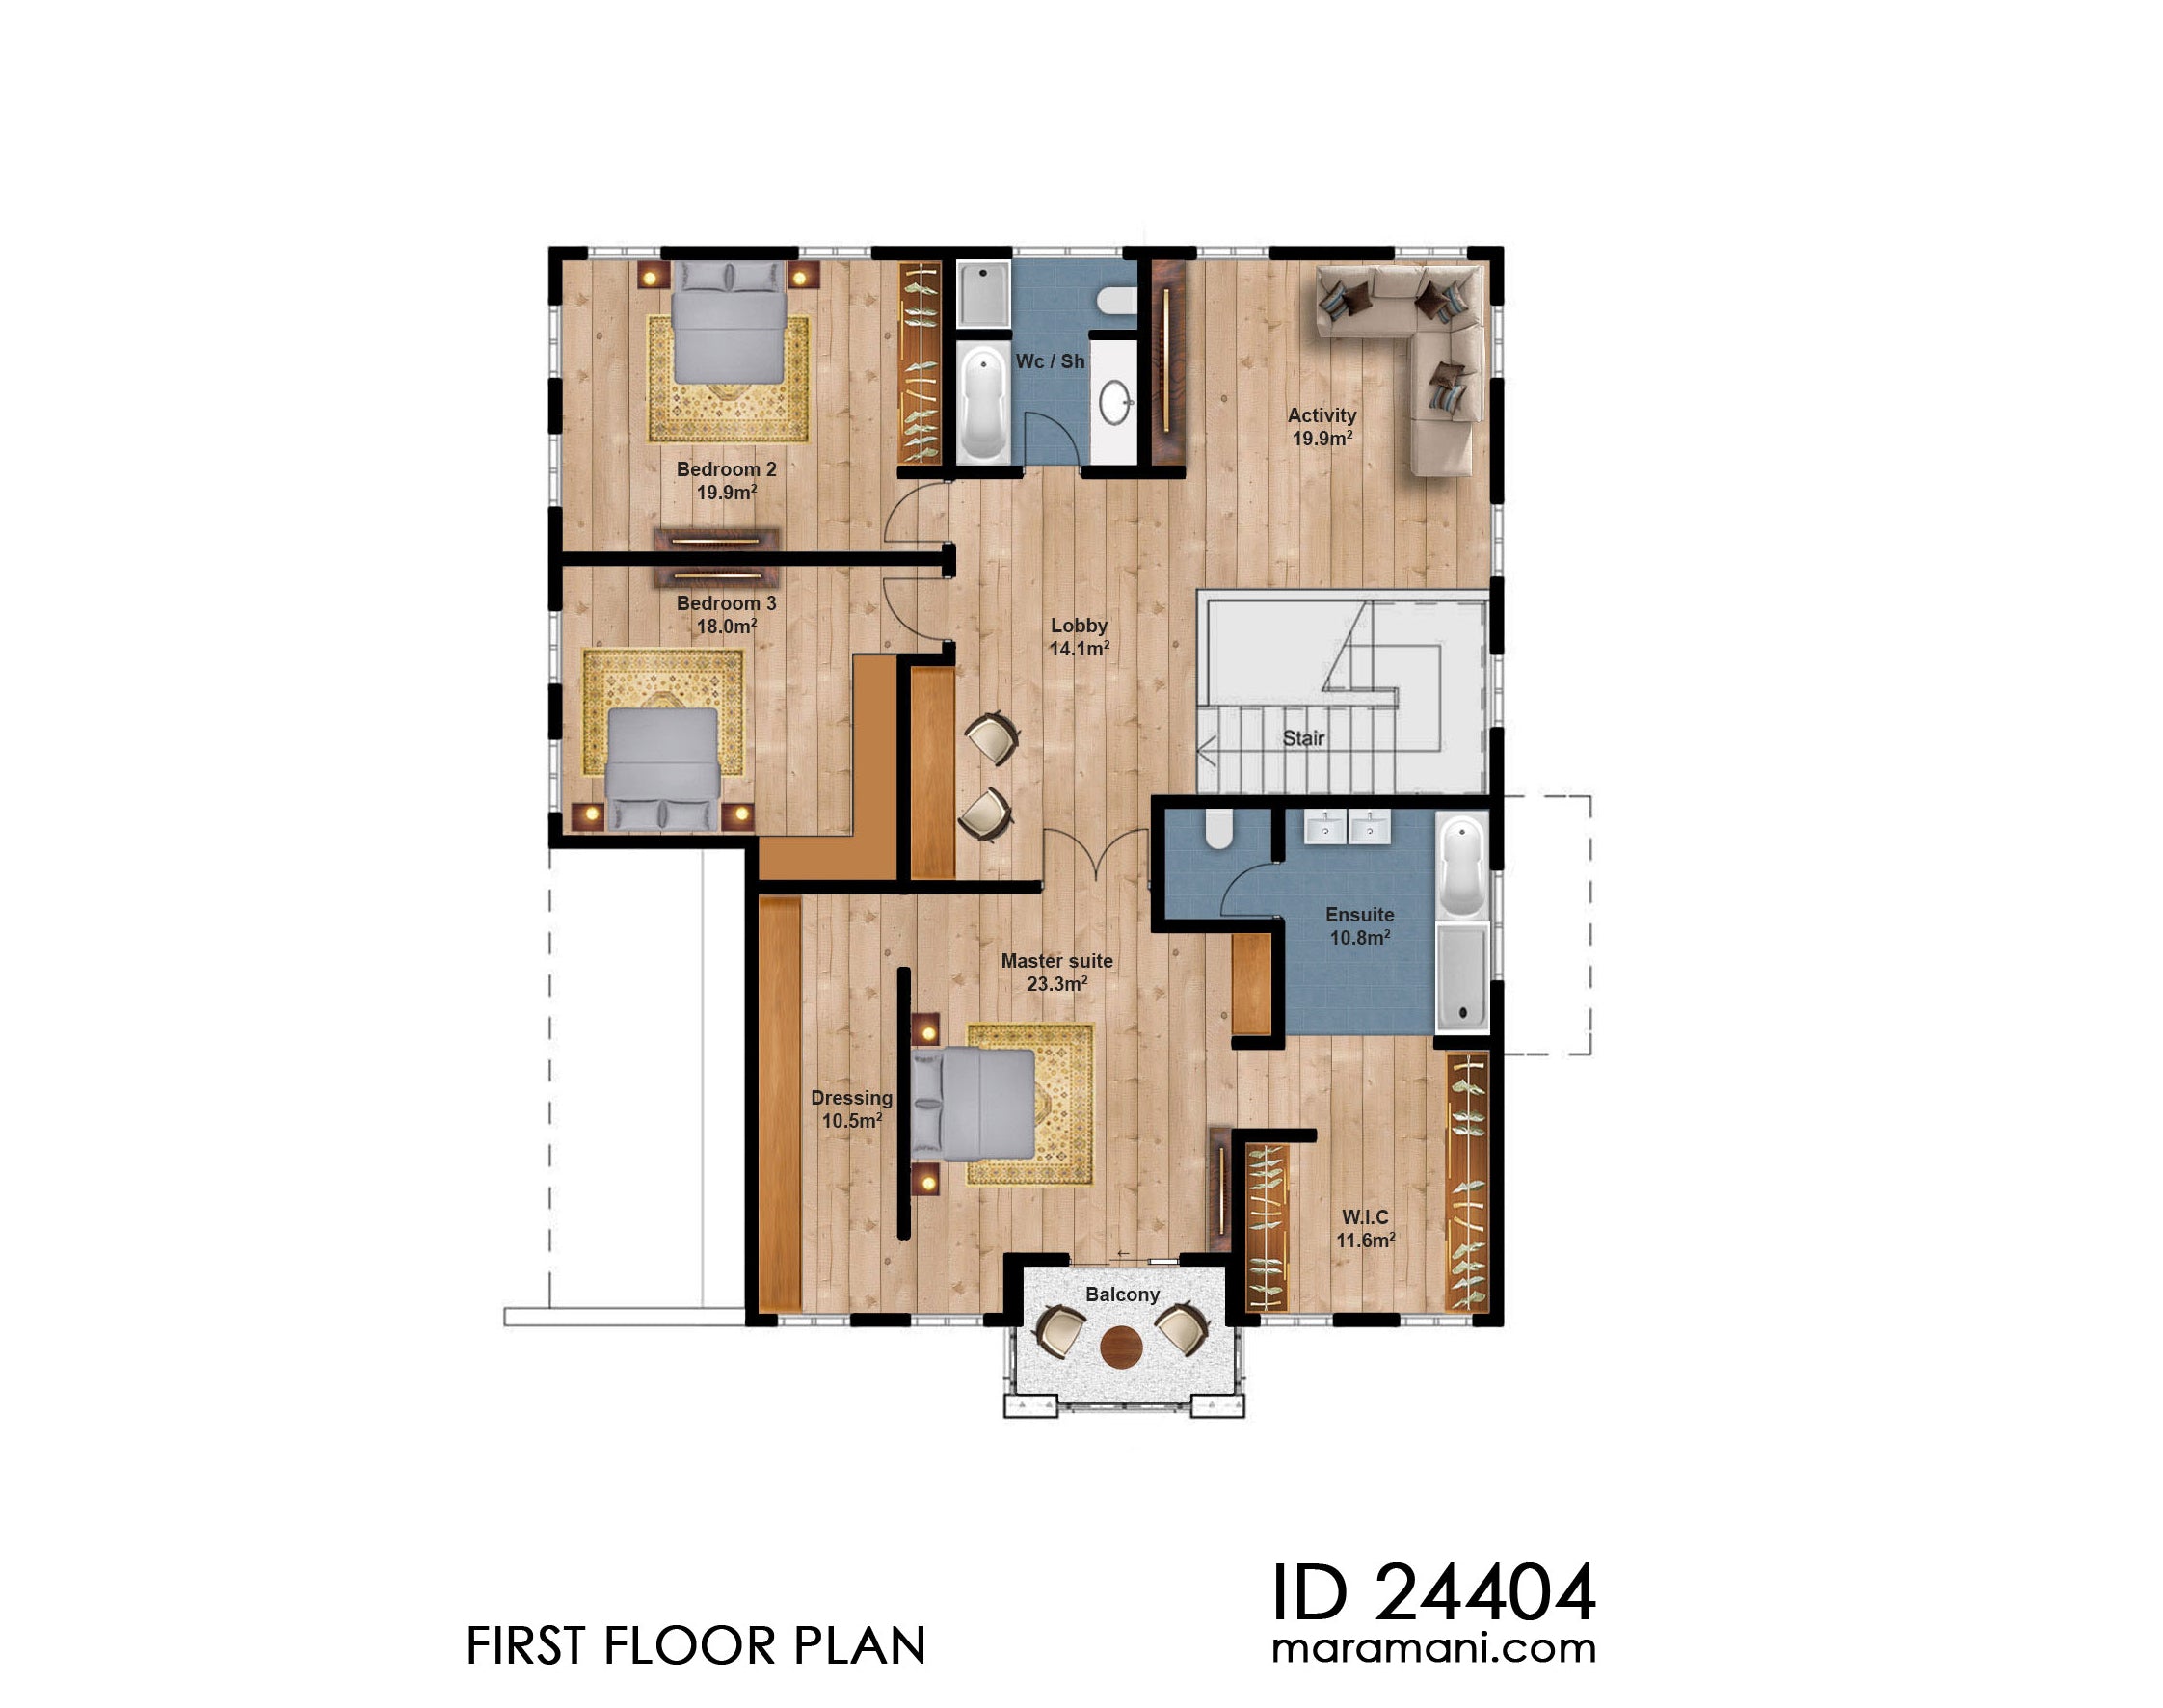 4 Bedroom Modern House Plan - ID 24404